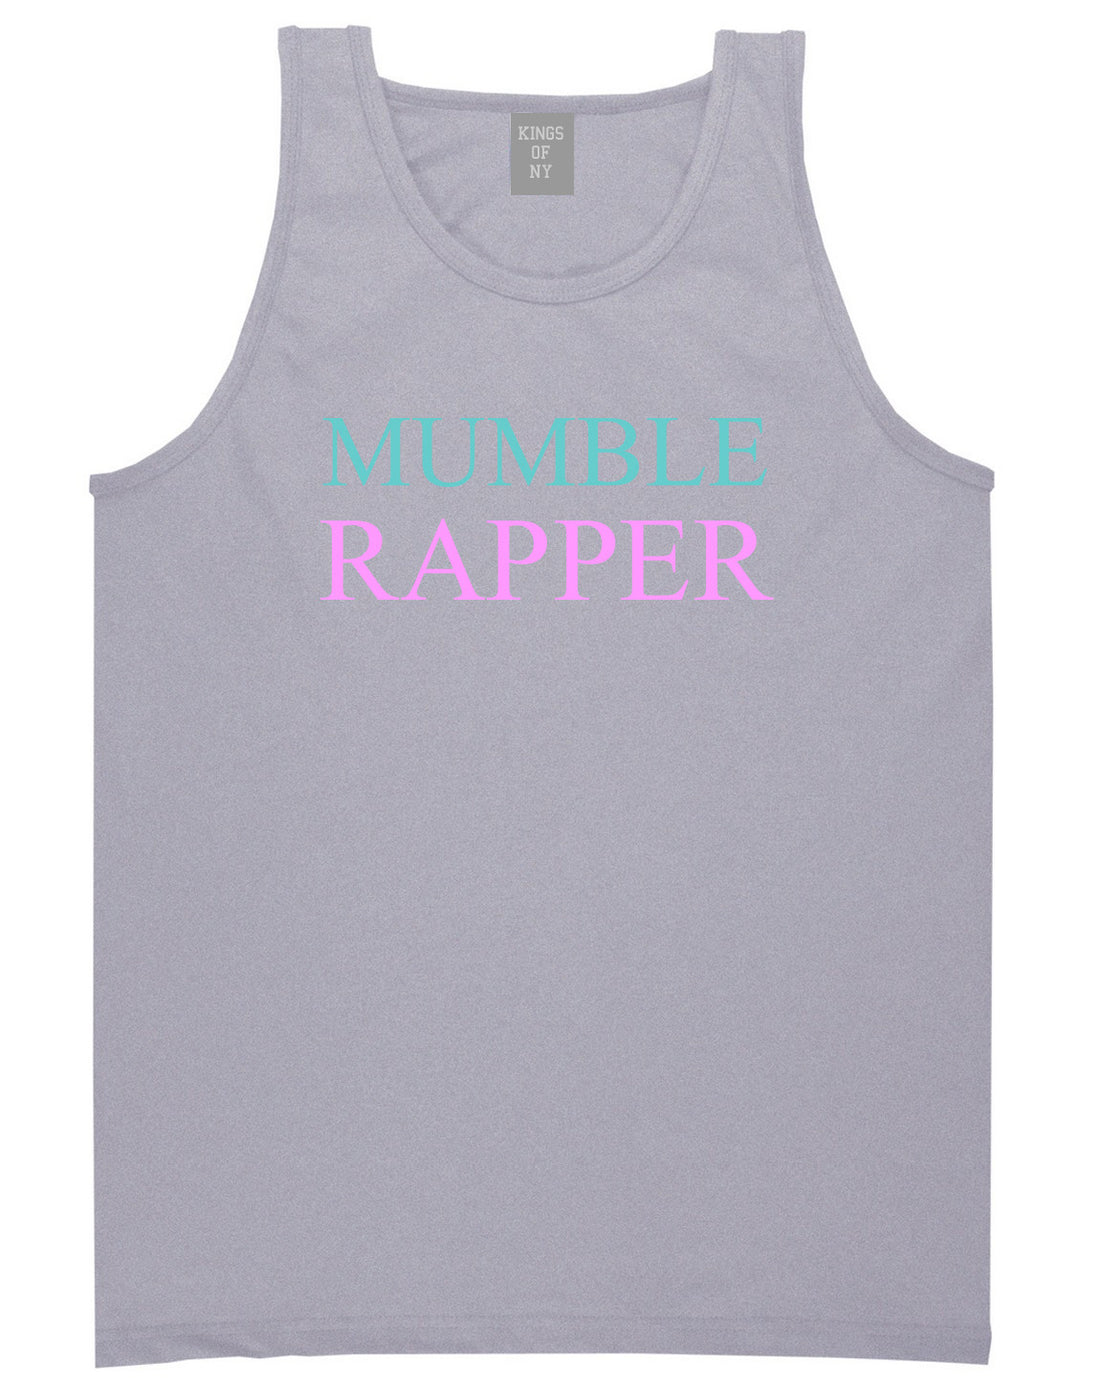 Mumble Rapper Tank Top in Grey